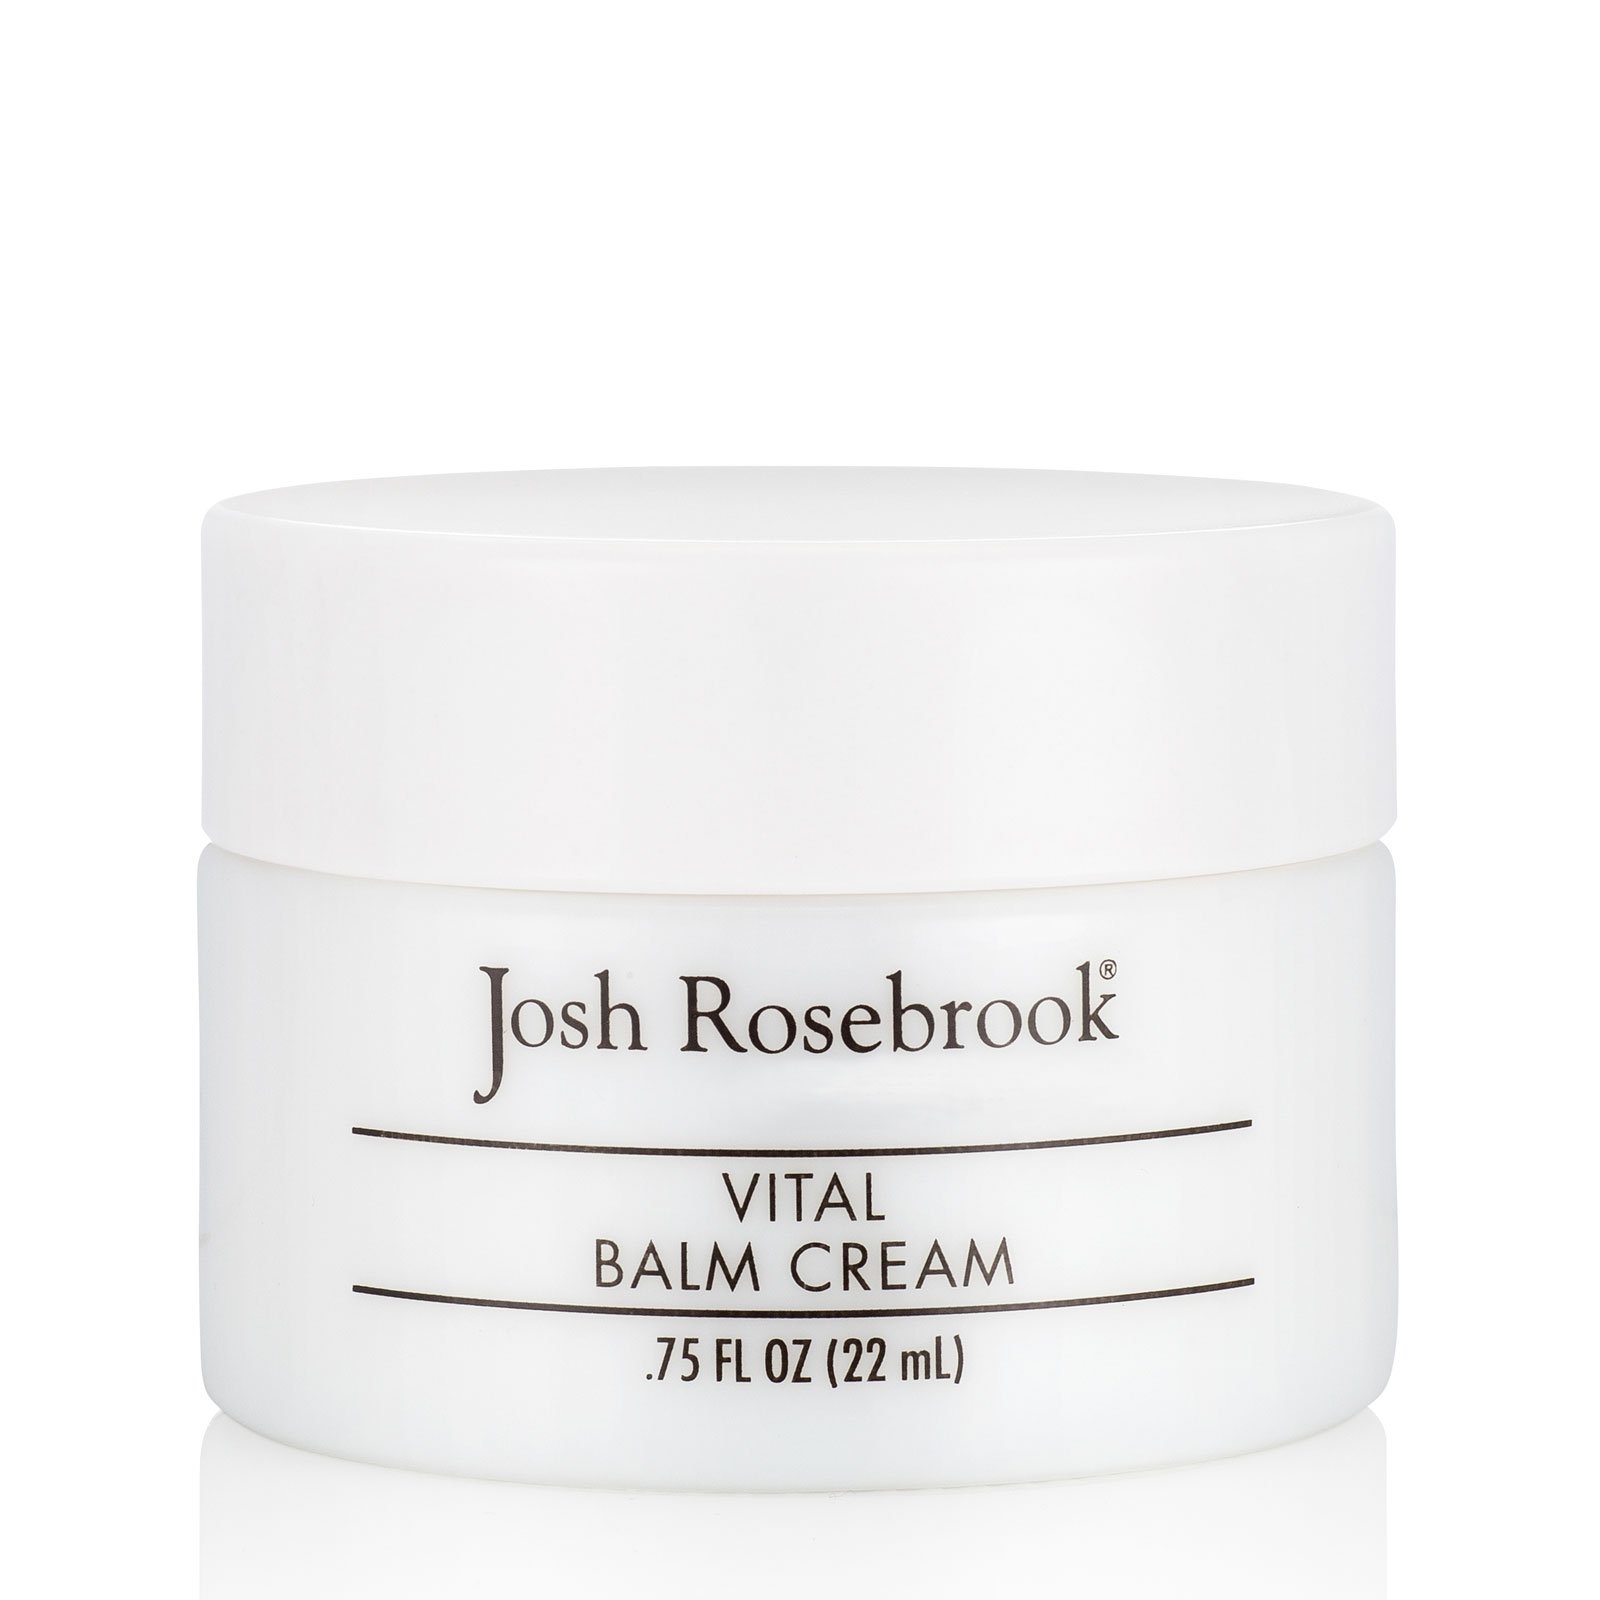 Josh Rosebrook Vital Balm Cream 22Ml